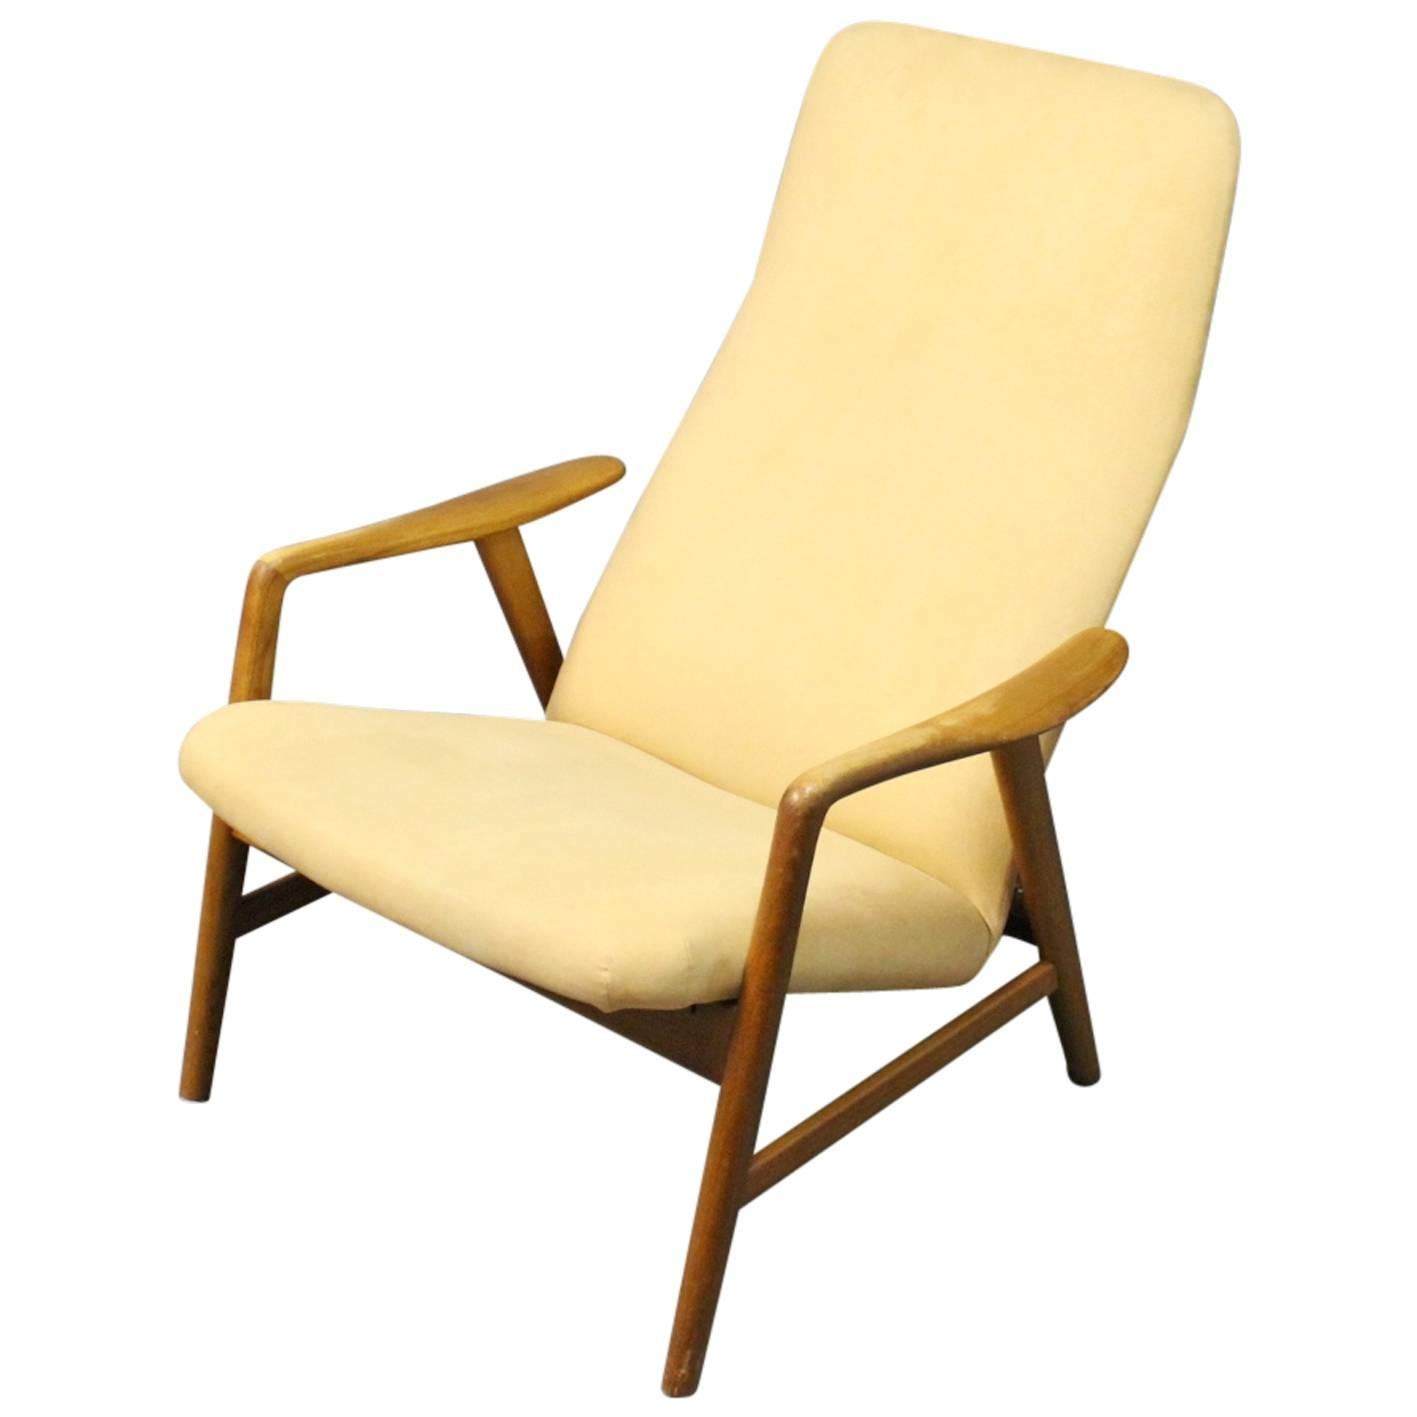 Alf Svensson Highback Reclining Lounge Chair Manufactured by Fritz Hansen, 1957